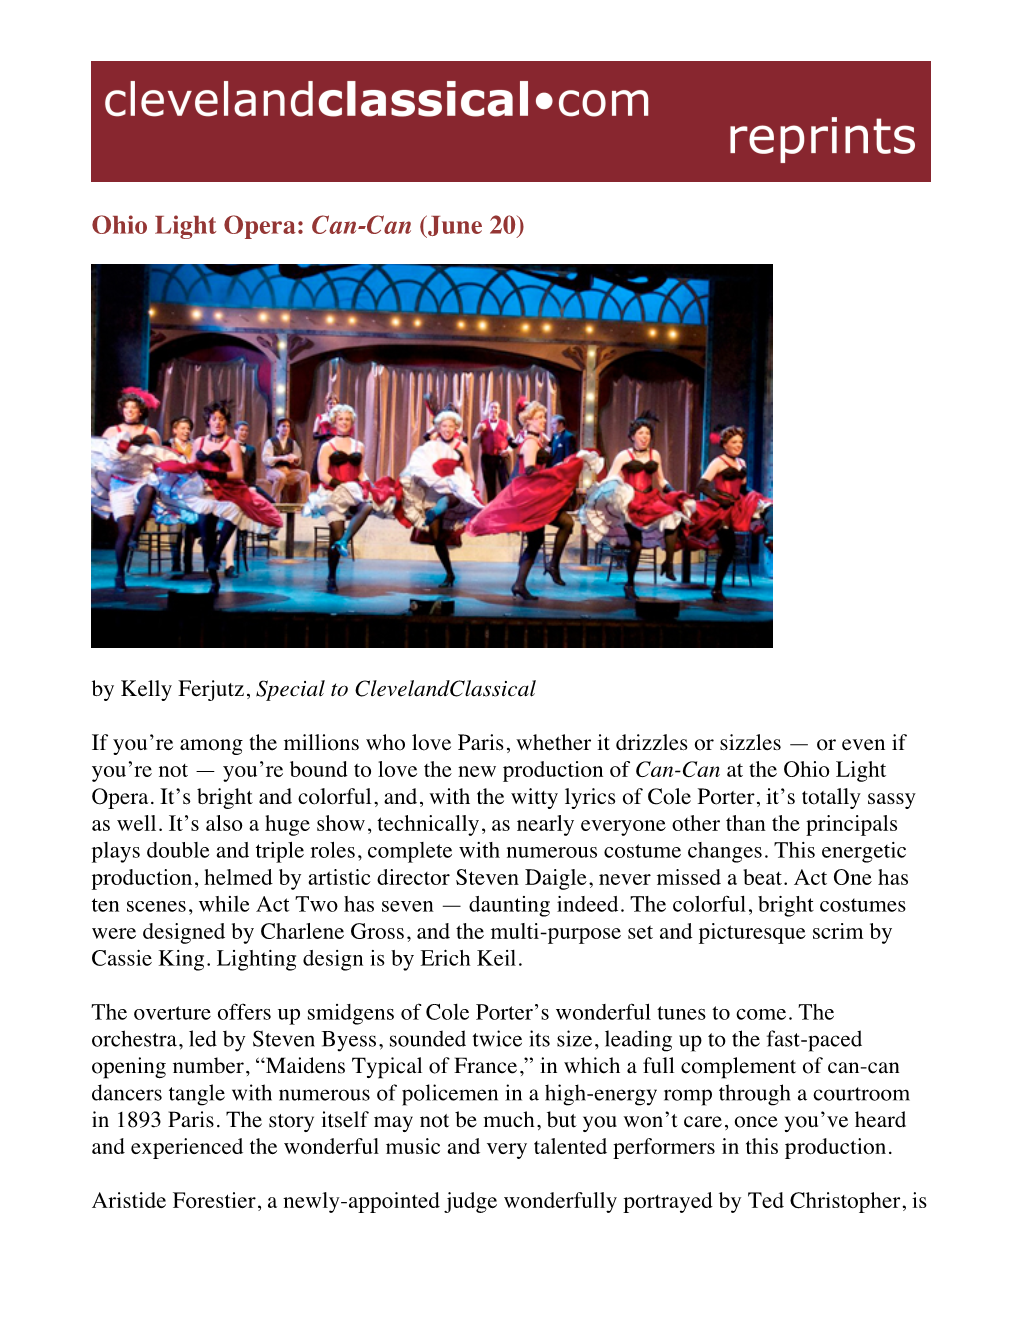 Ohio Light Opera: Can-Can (June 20)